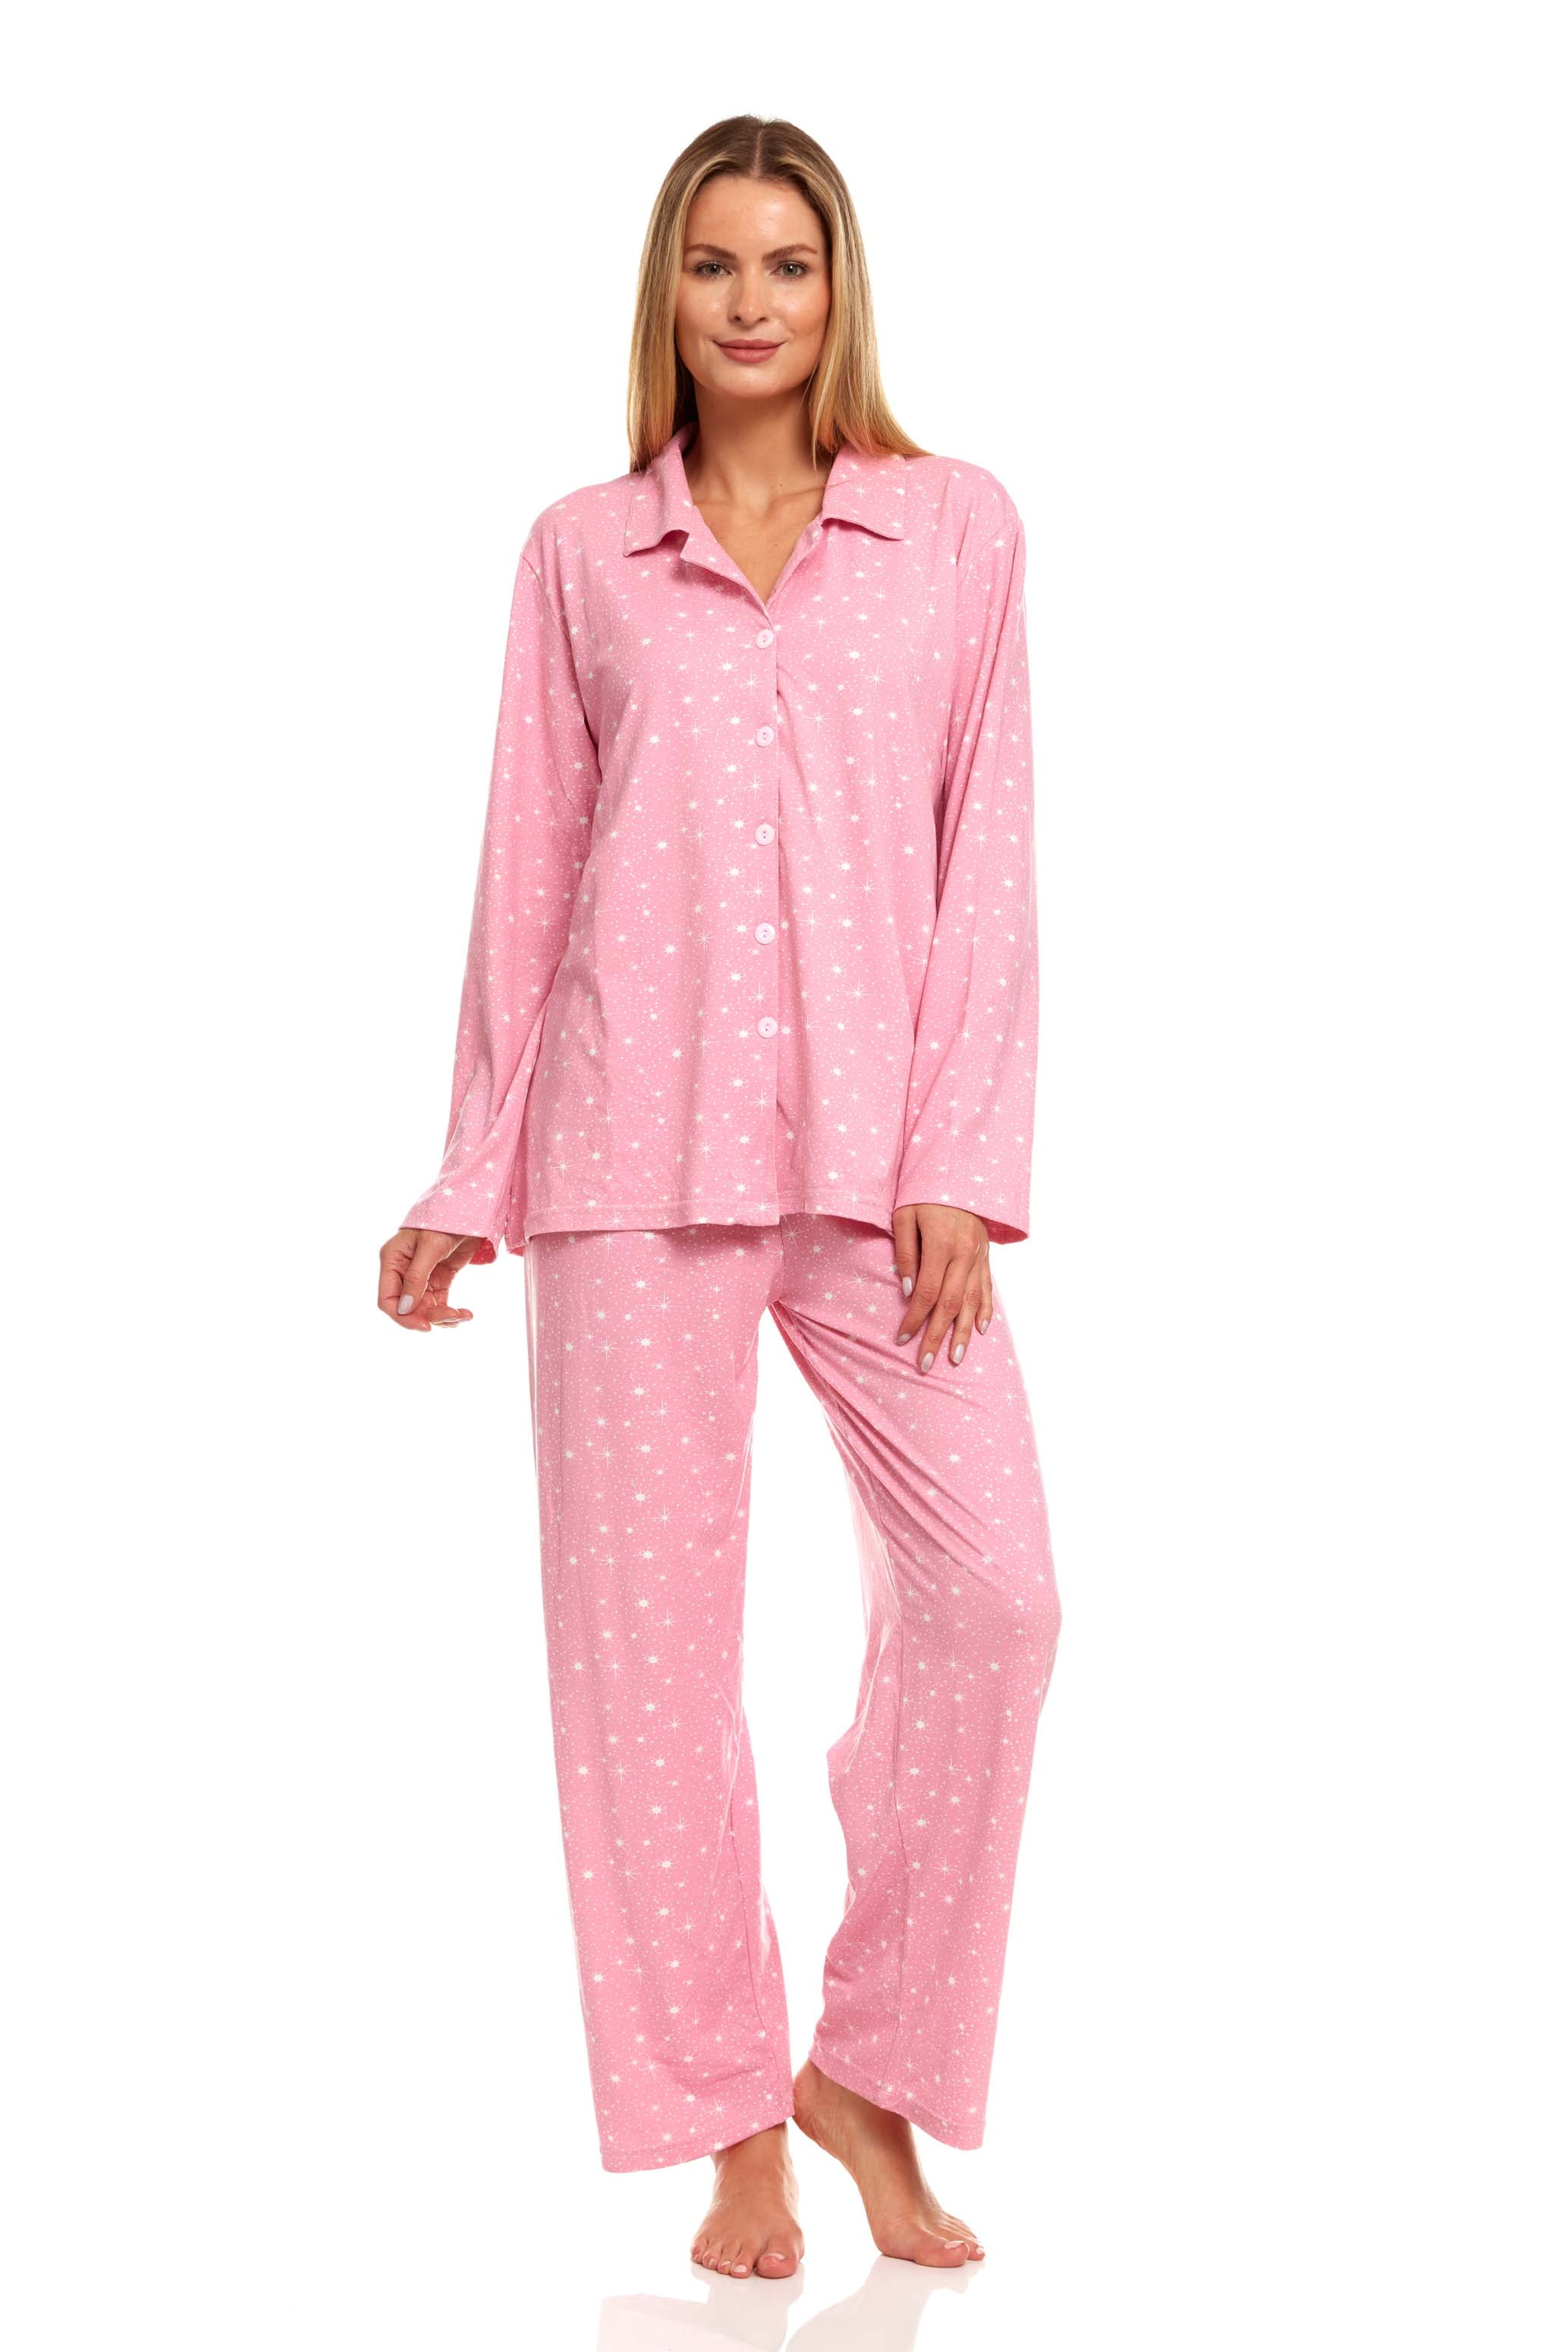 Premiere Fashion 2158 Womens Sleepwear Pajamas Woman